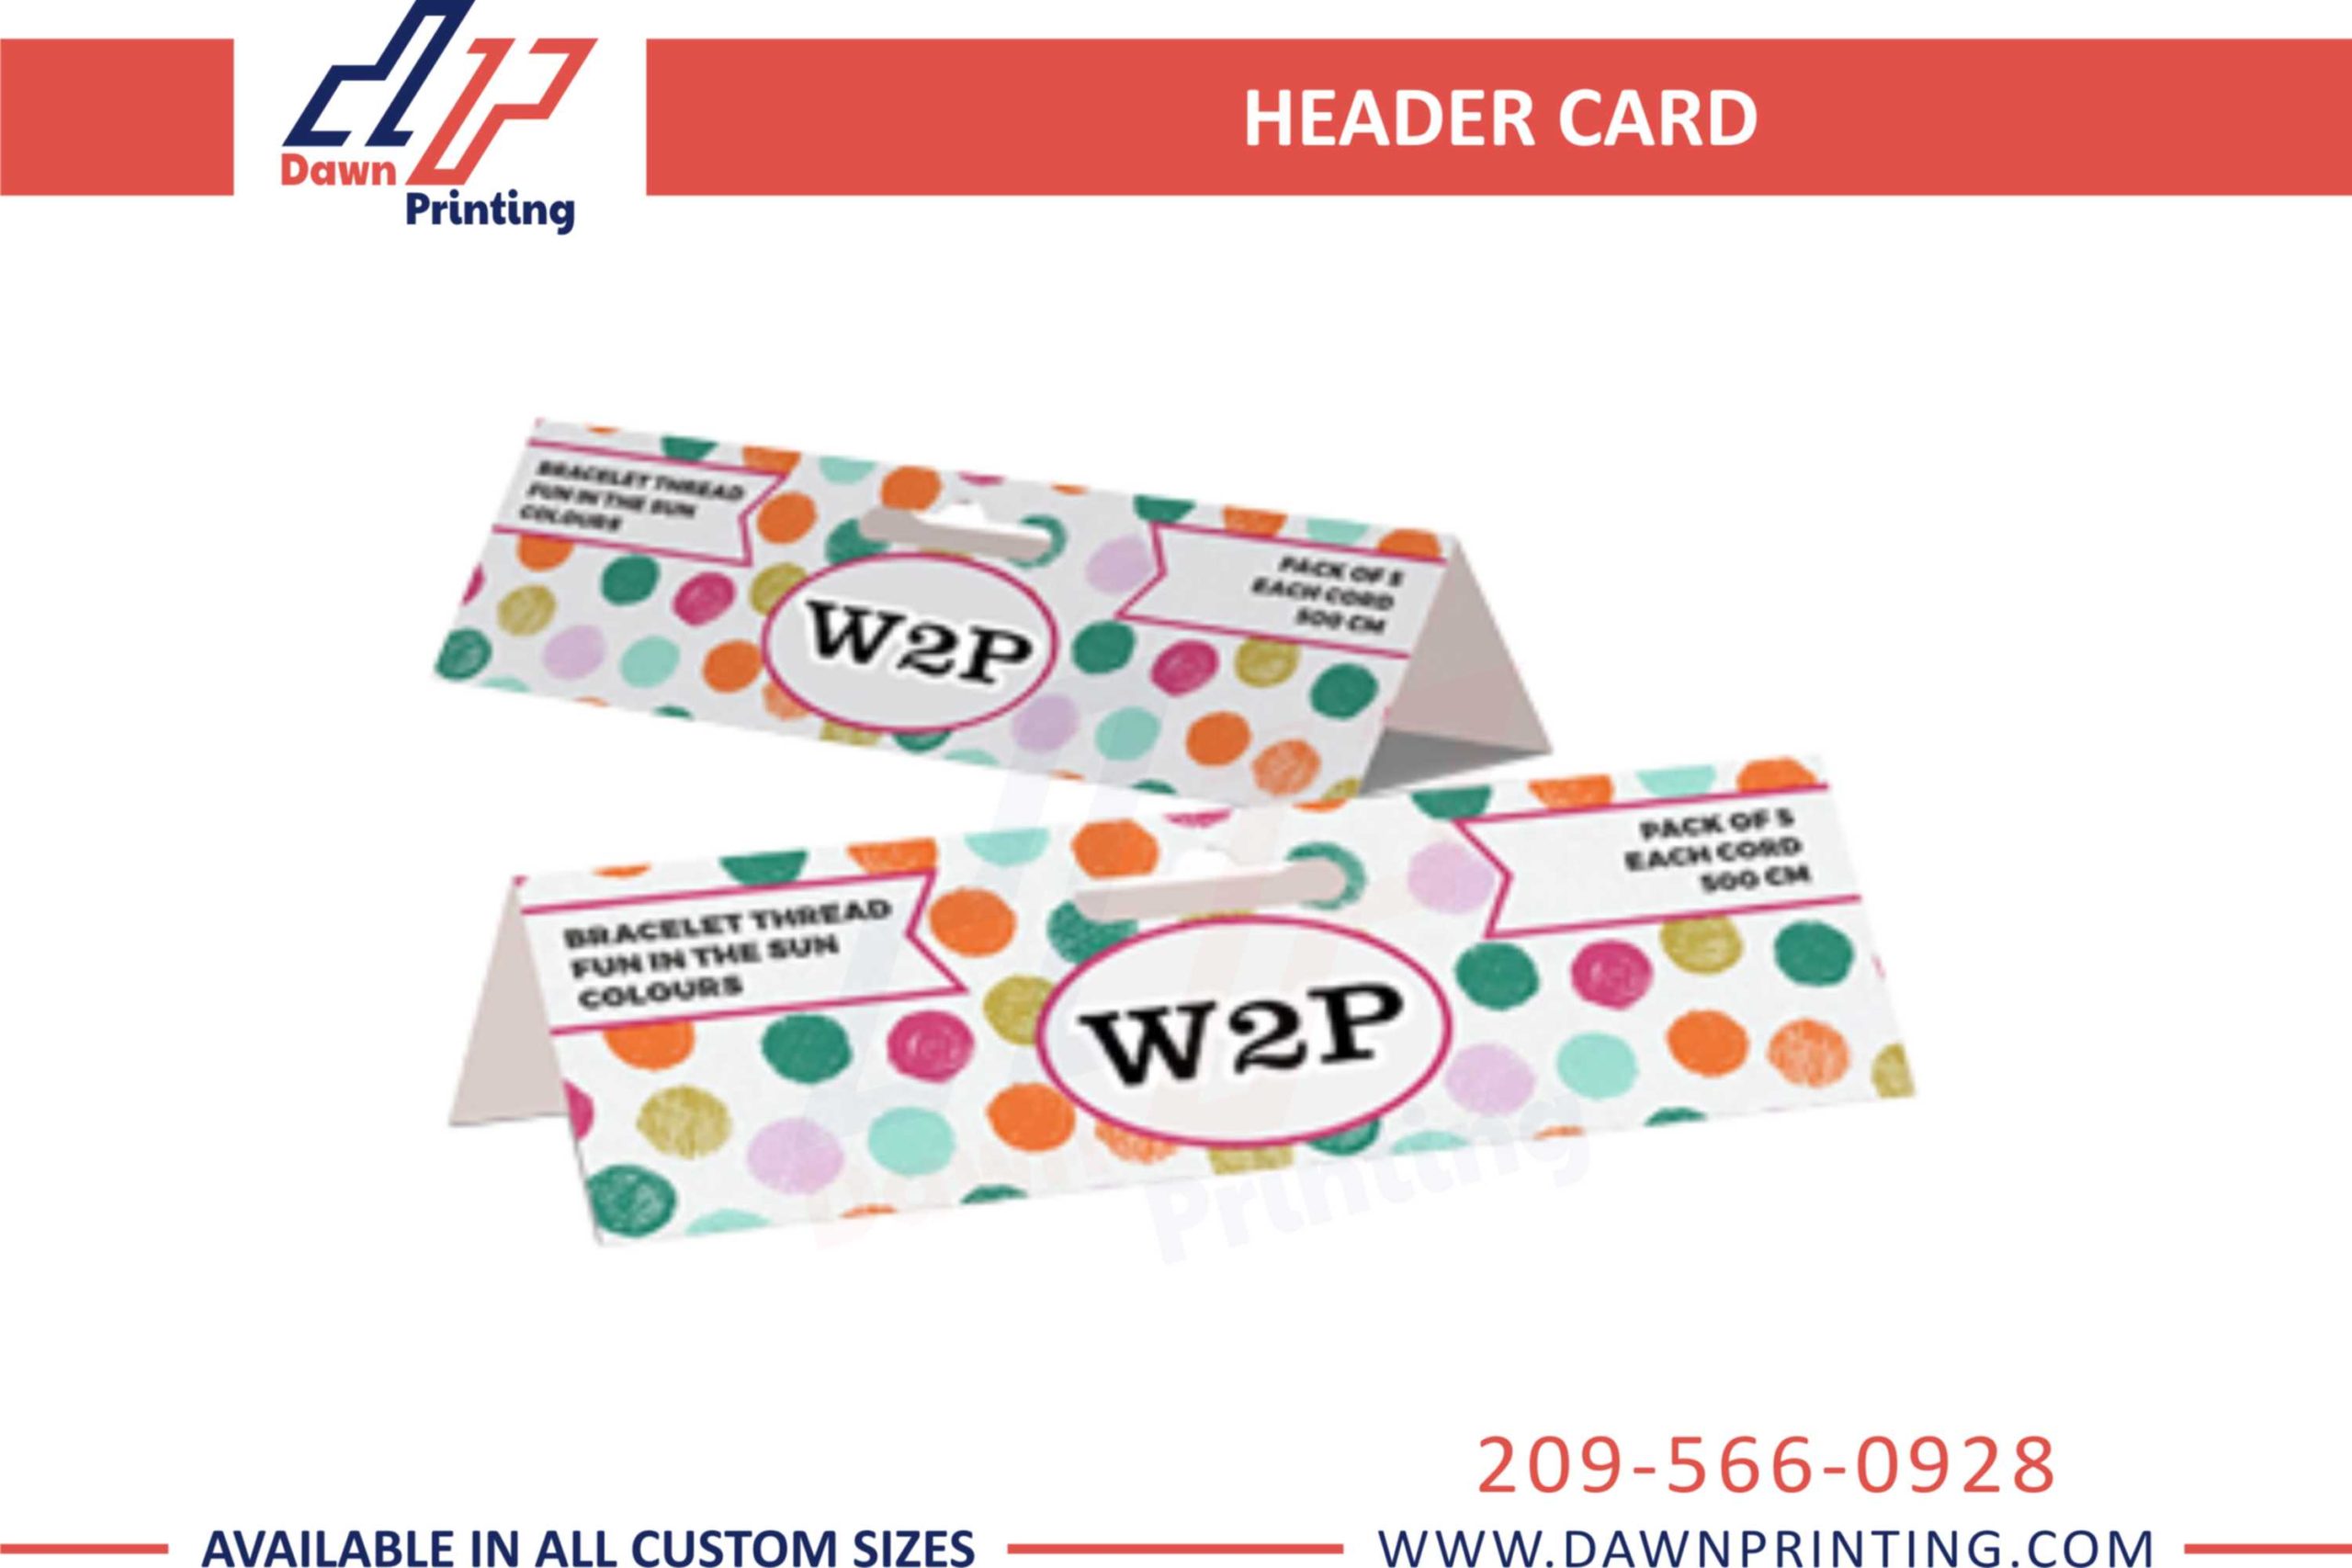 Printed Header Cards - Dawn Printing